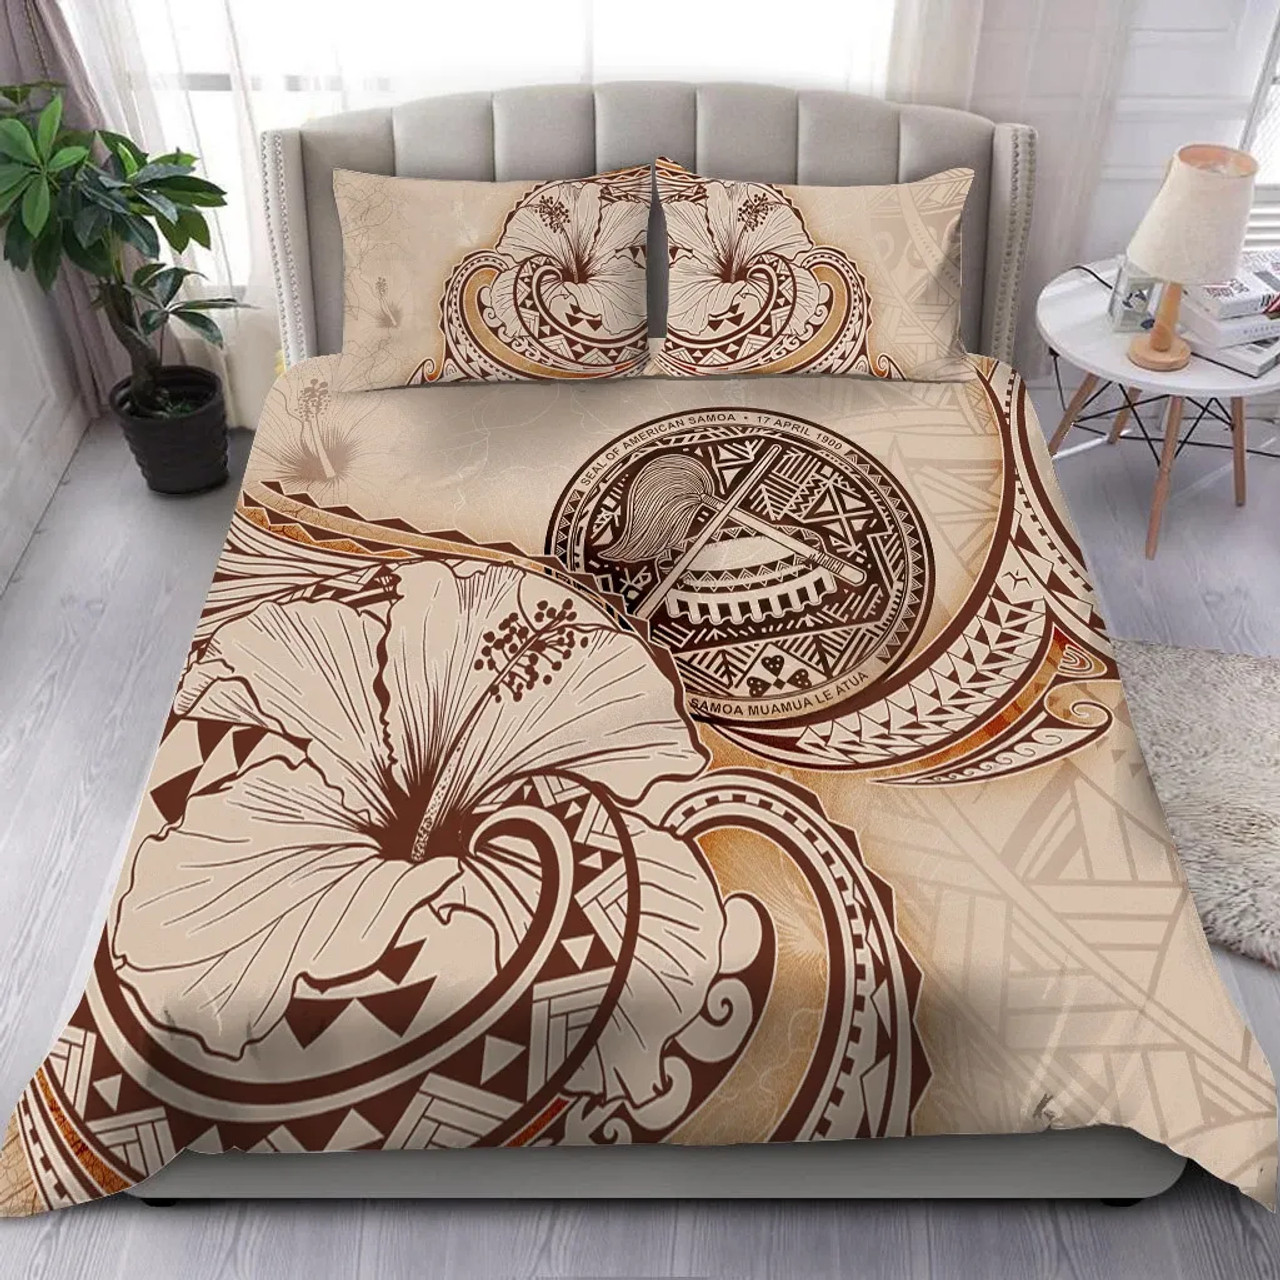 American Samoa Bedding Set - Hibiscus Flower Vintage Style 1